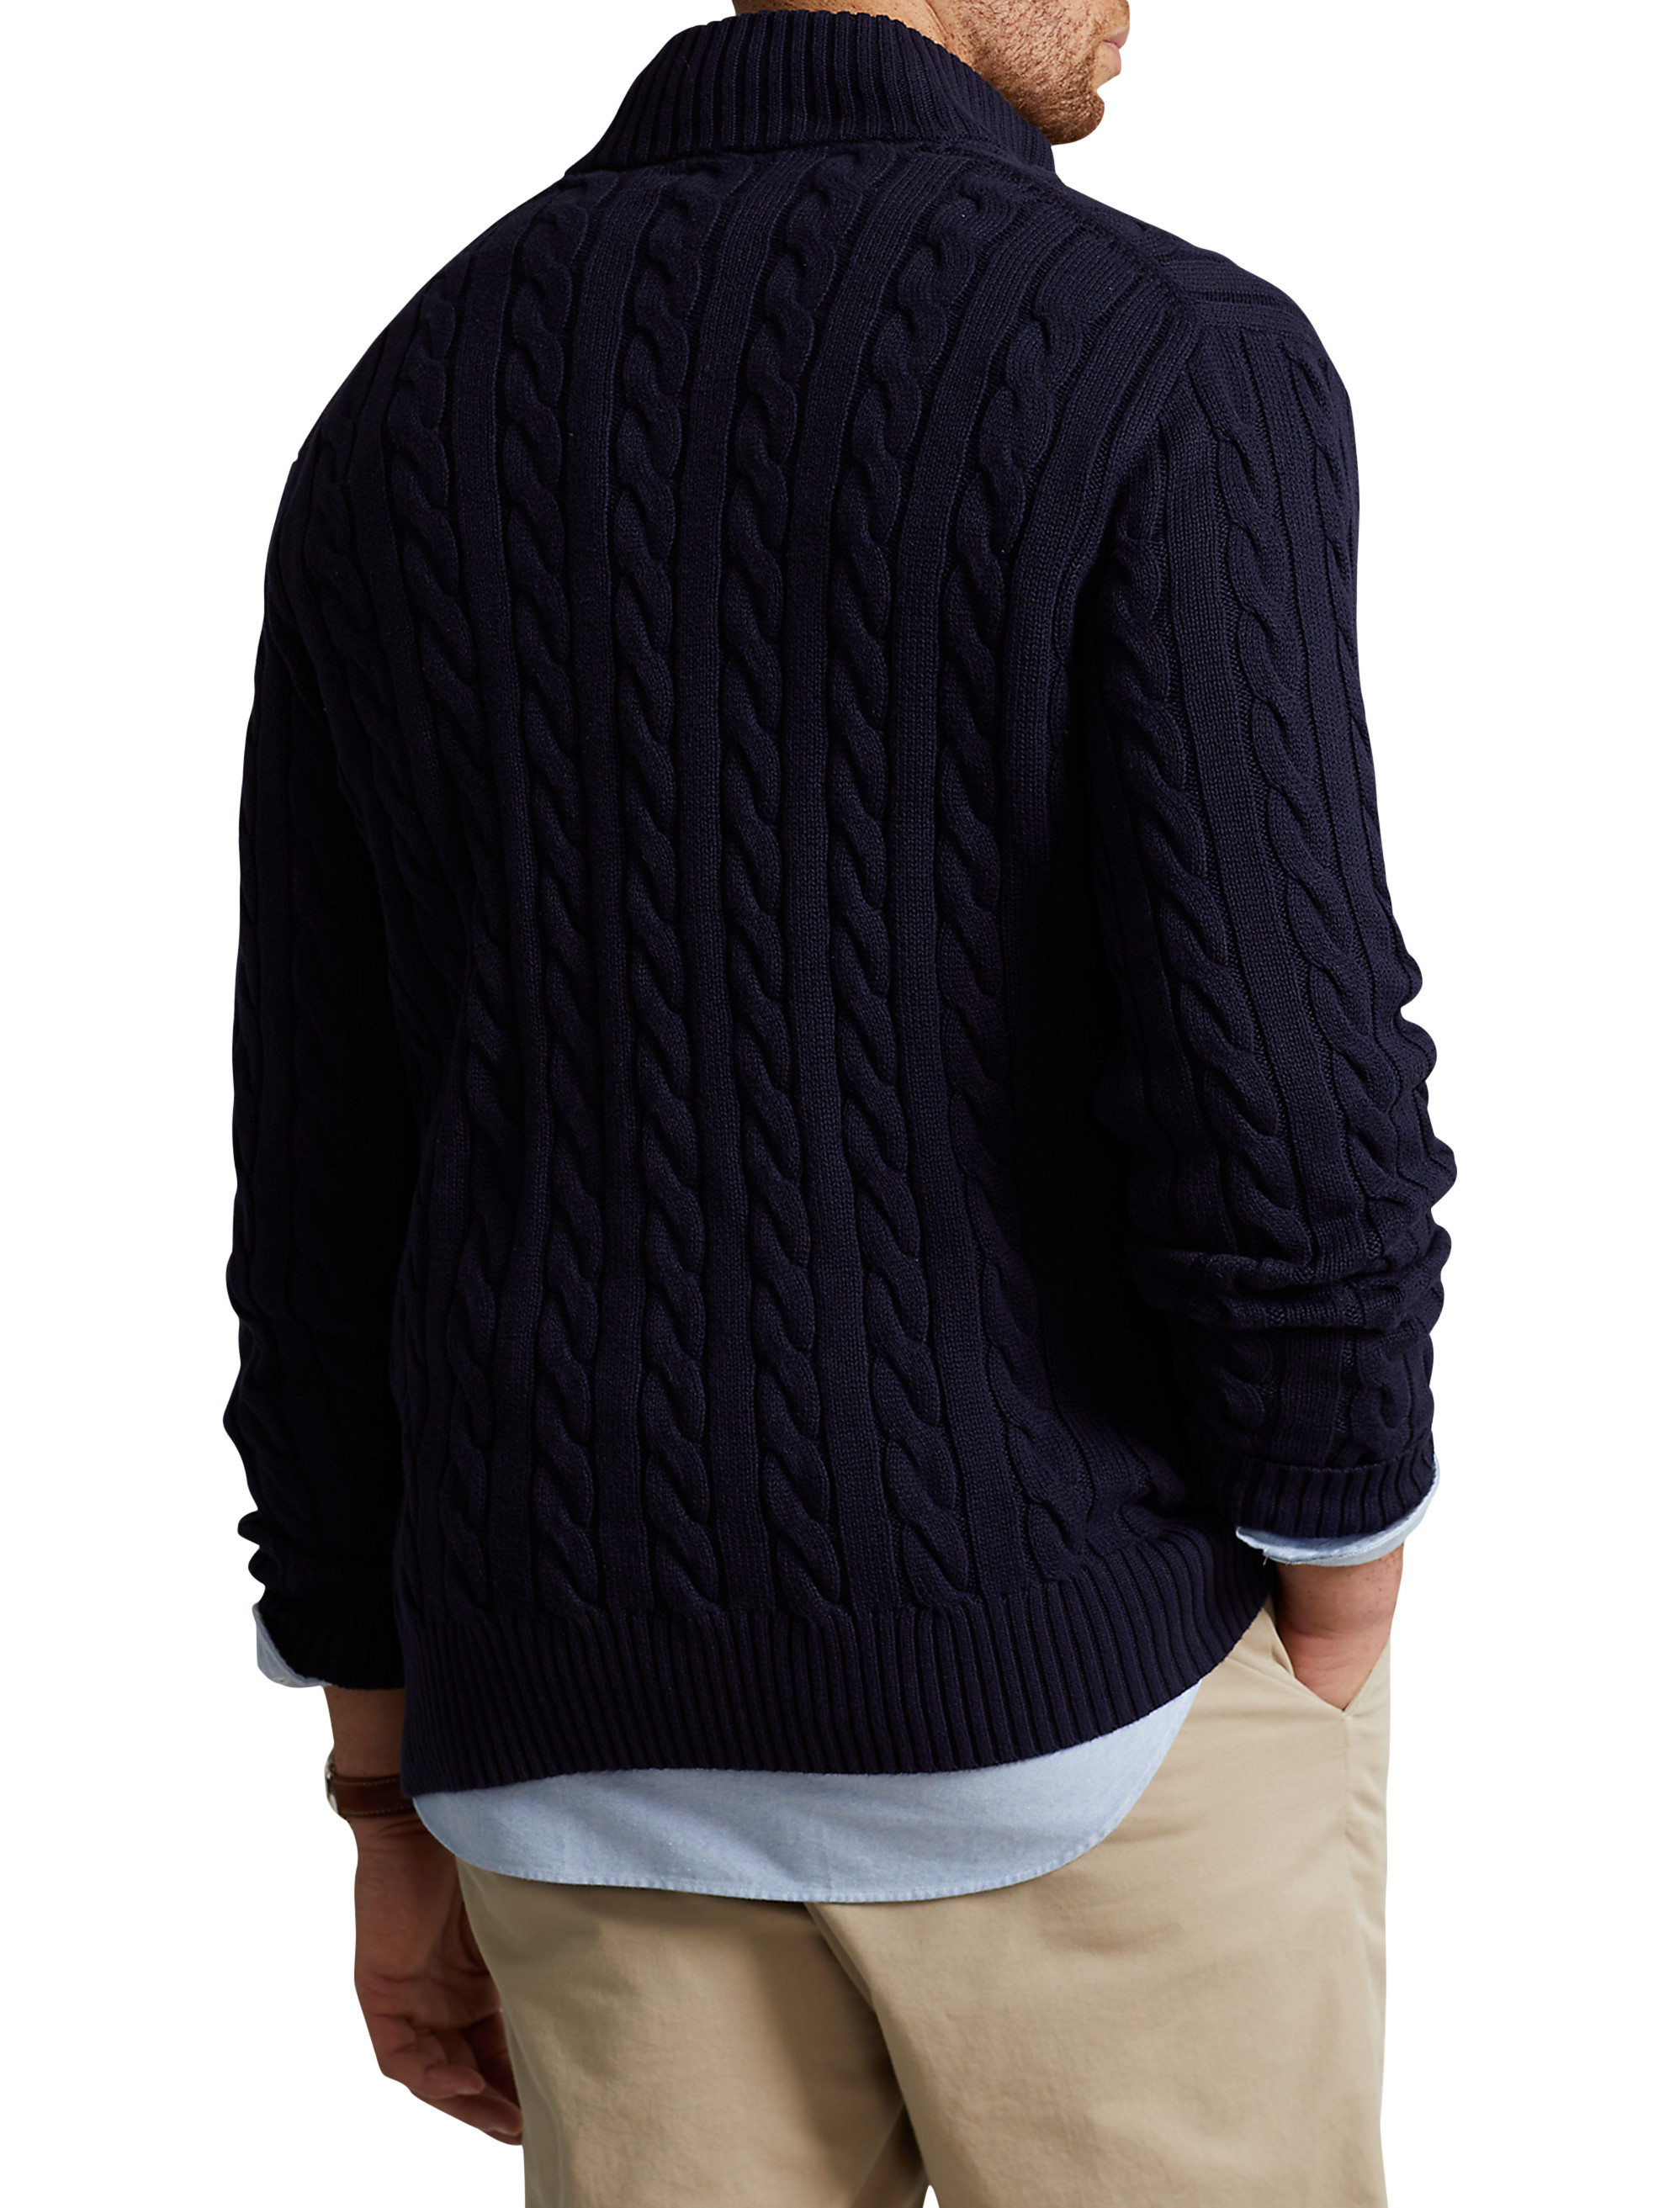 Vintage Polo Ralph Lauren Black Knit Sweater Mens Size 3XB - beyond exchange